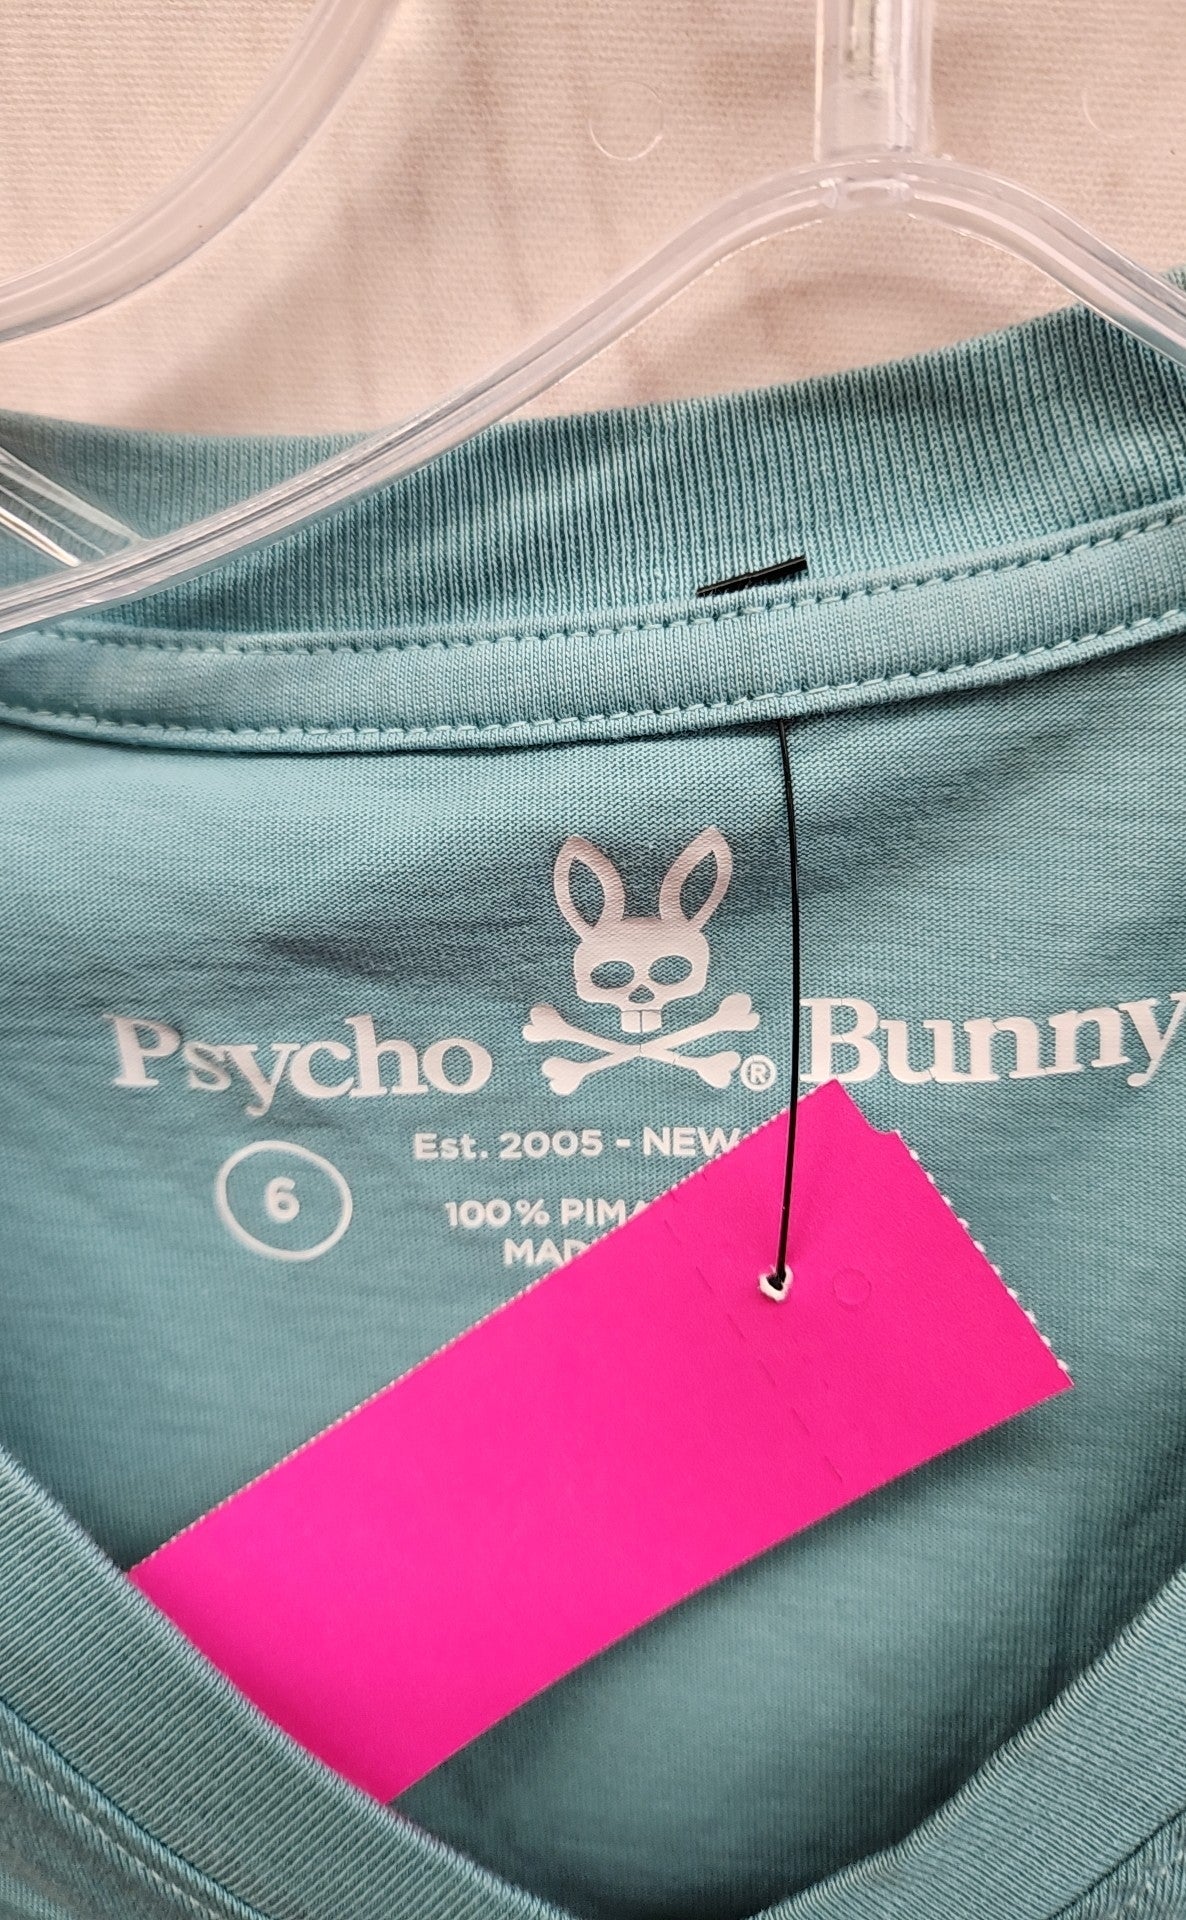 Psycho Bunny Men's Size M Turquoise Shirt